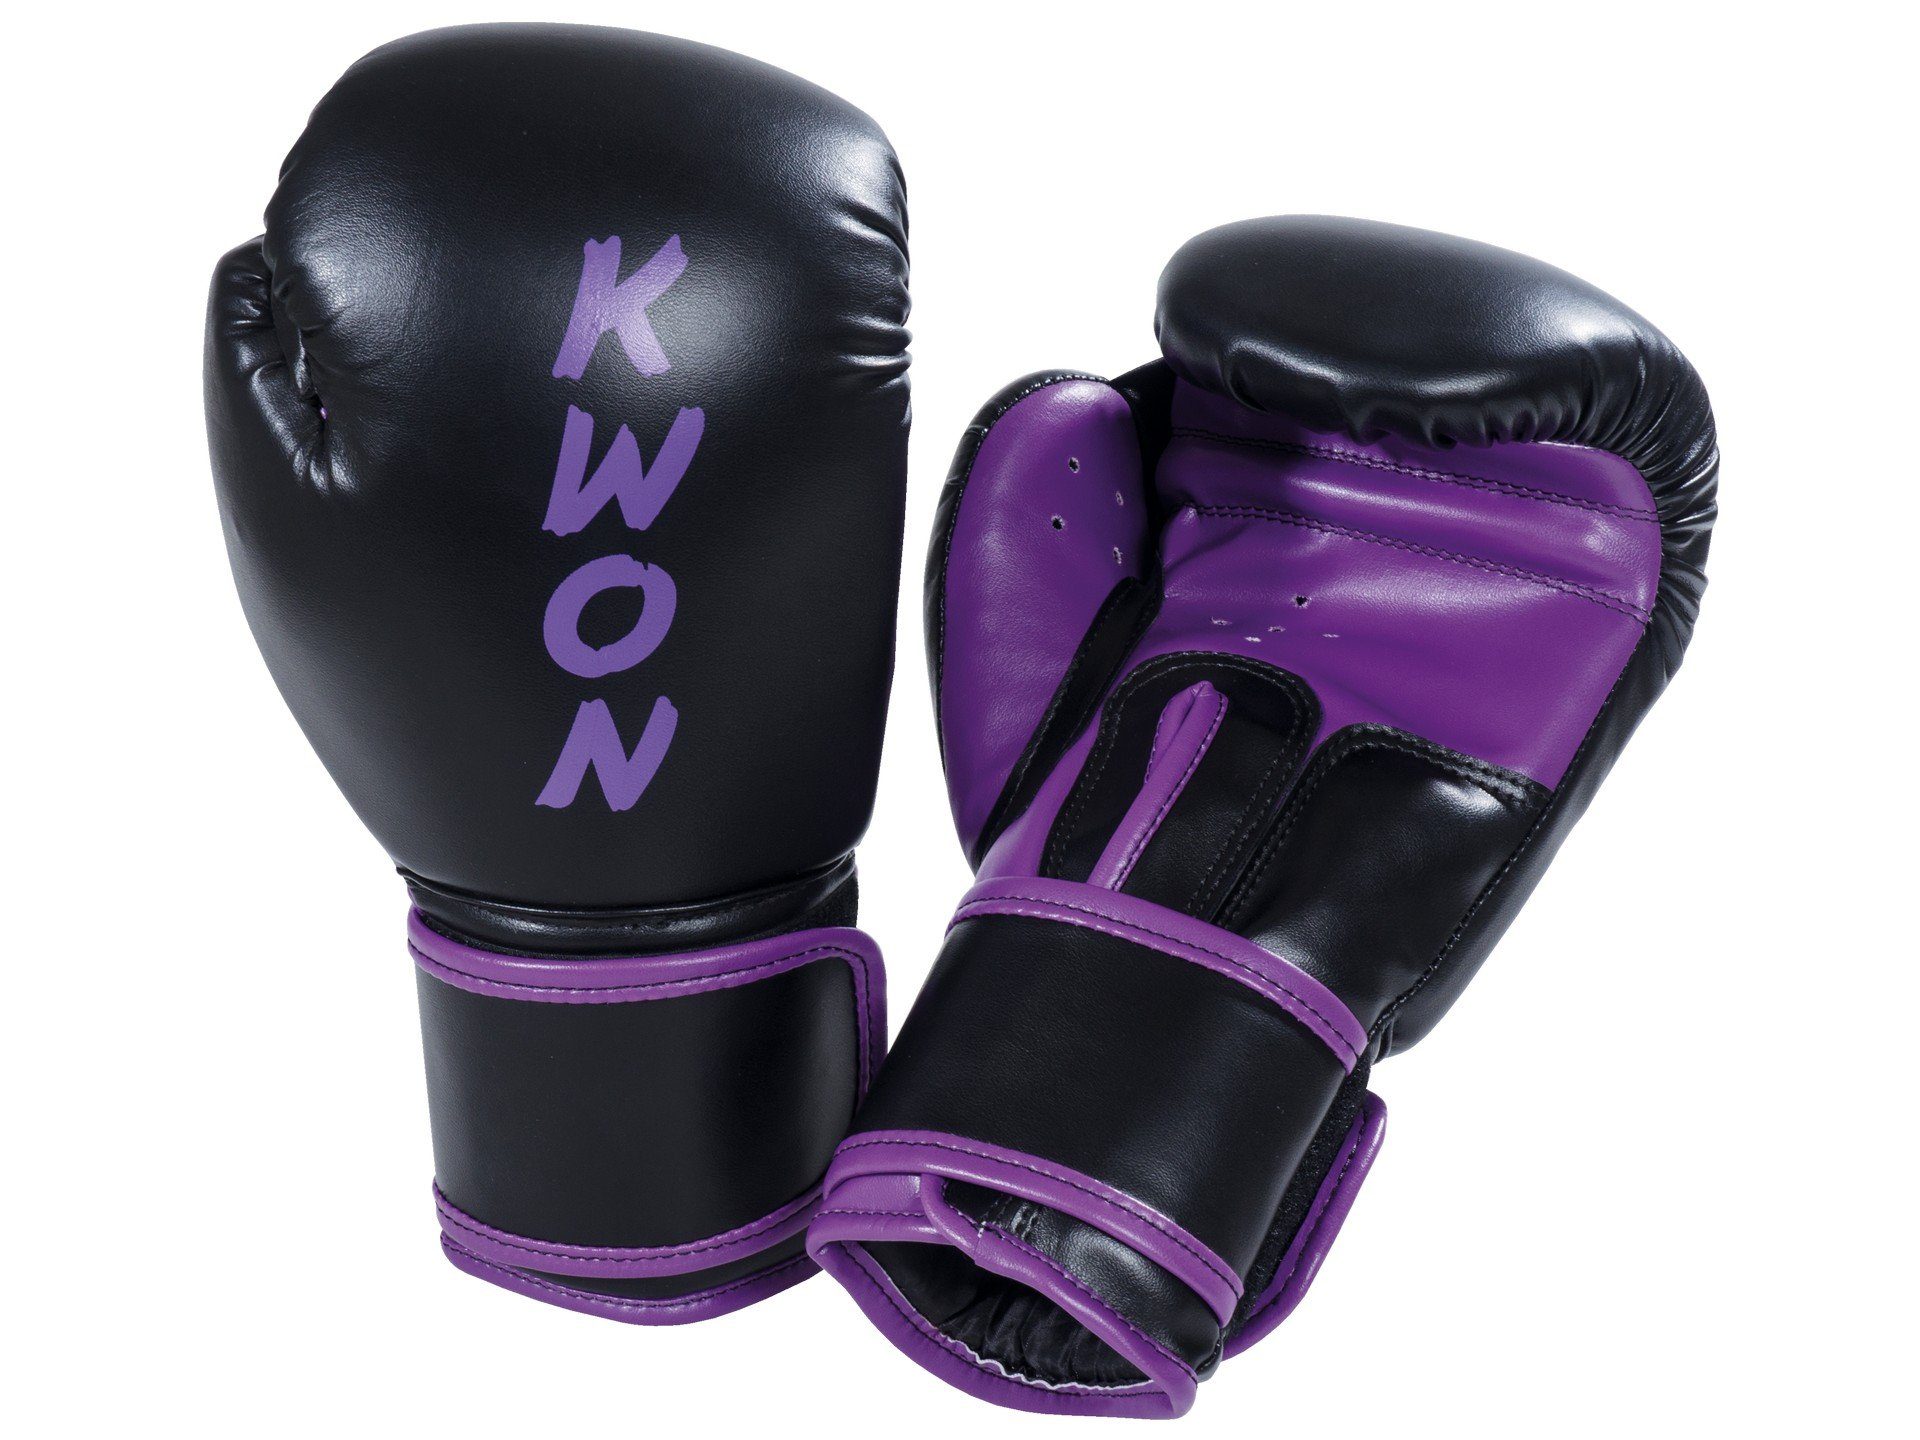 KWON Boxhandschuhe (Paar), 8 Kickboxen Unzen Einsteiger, Steko MMA Boxen und Wettkampf Training - Box-Handschuhe Fortgeschrittene 10